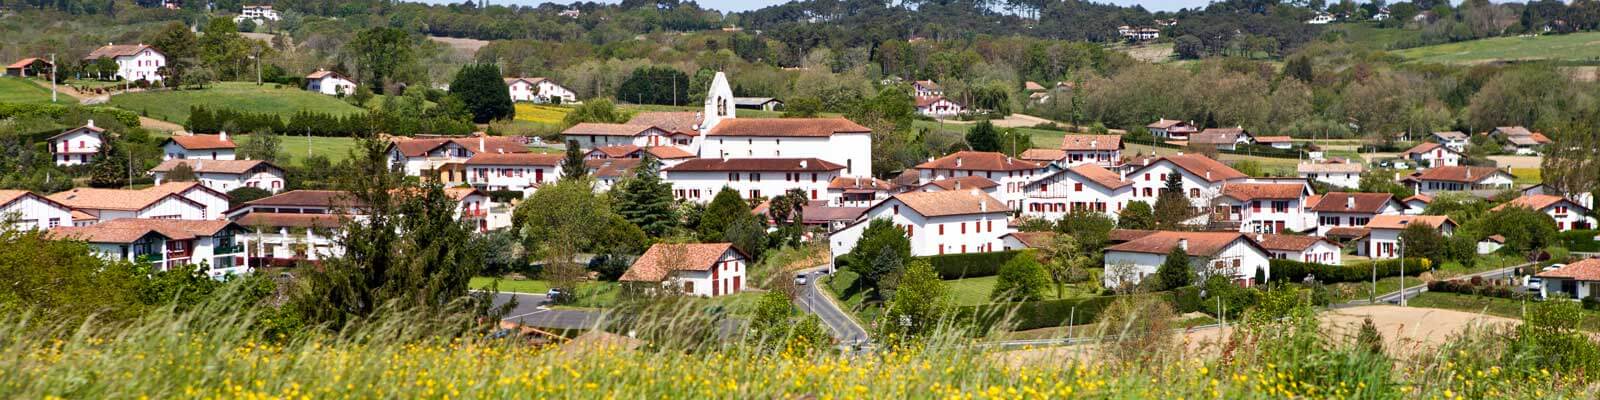 Visit Ahetze Campsite On The Basque Coast